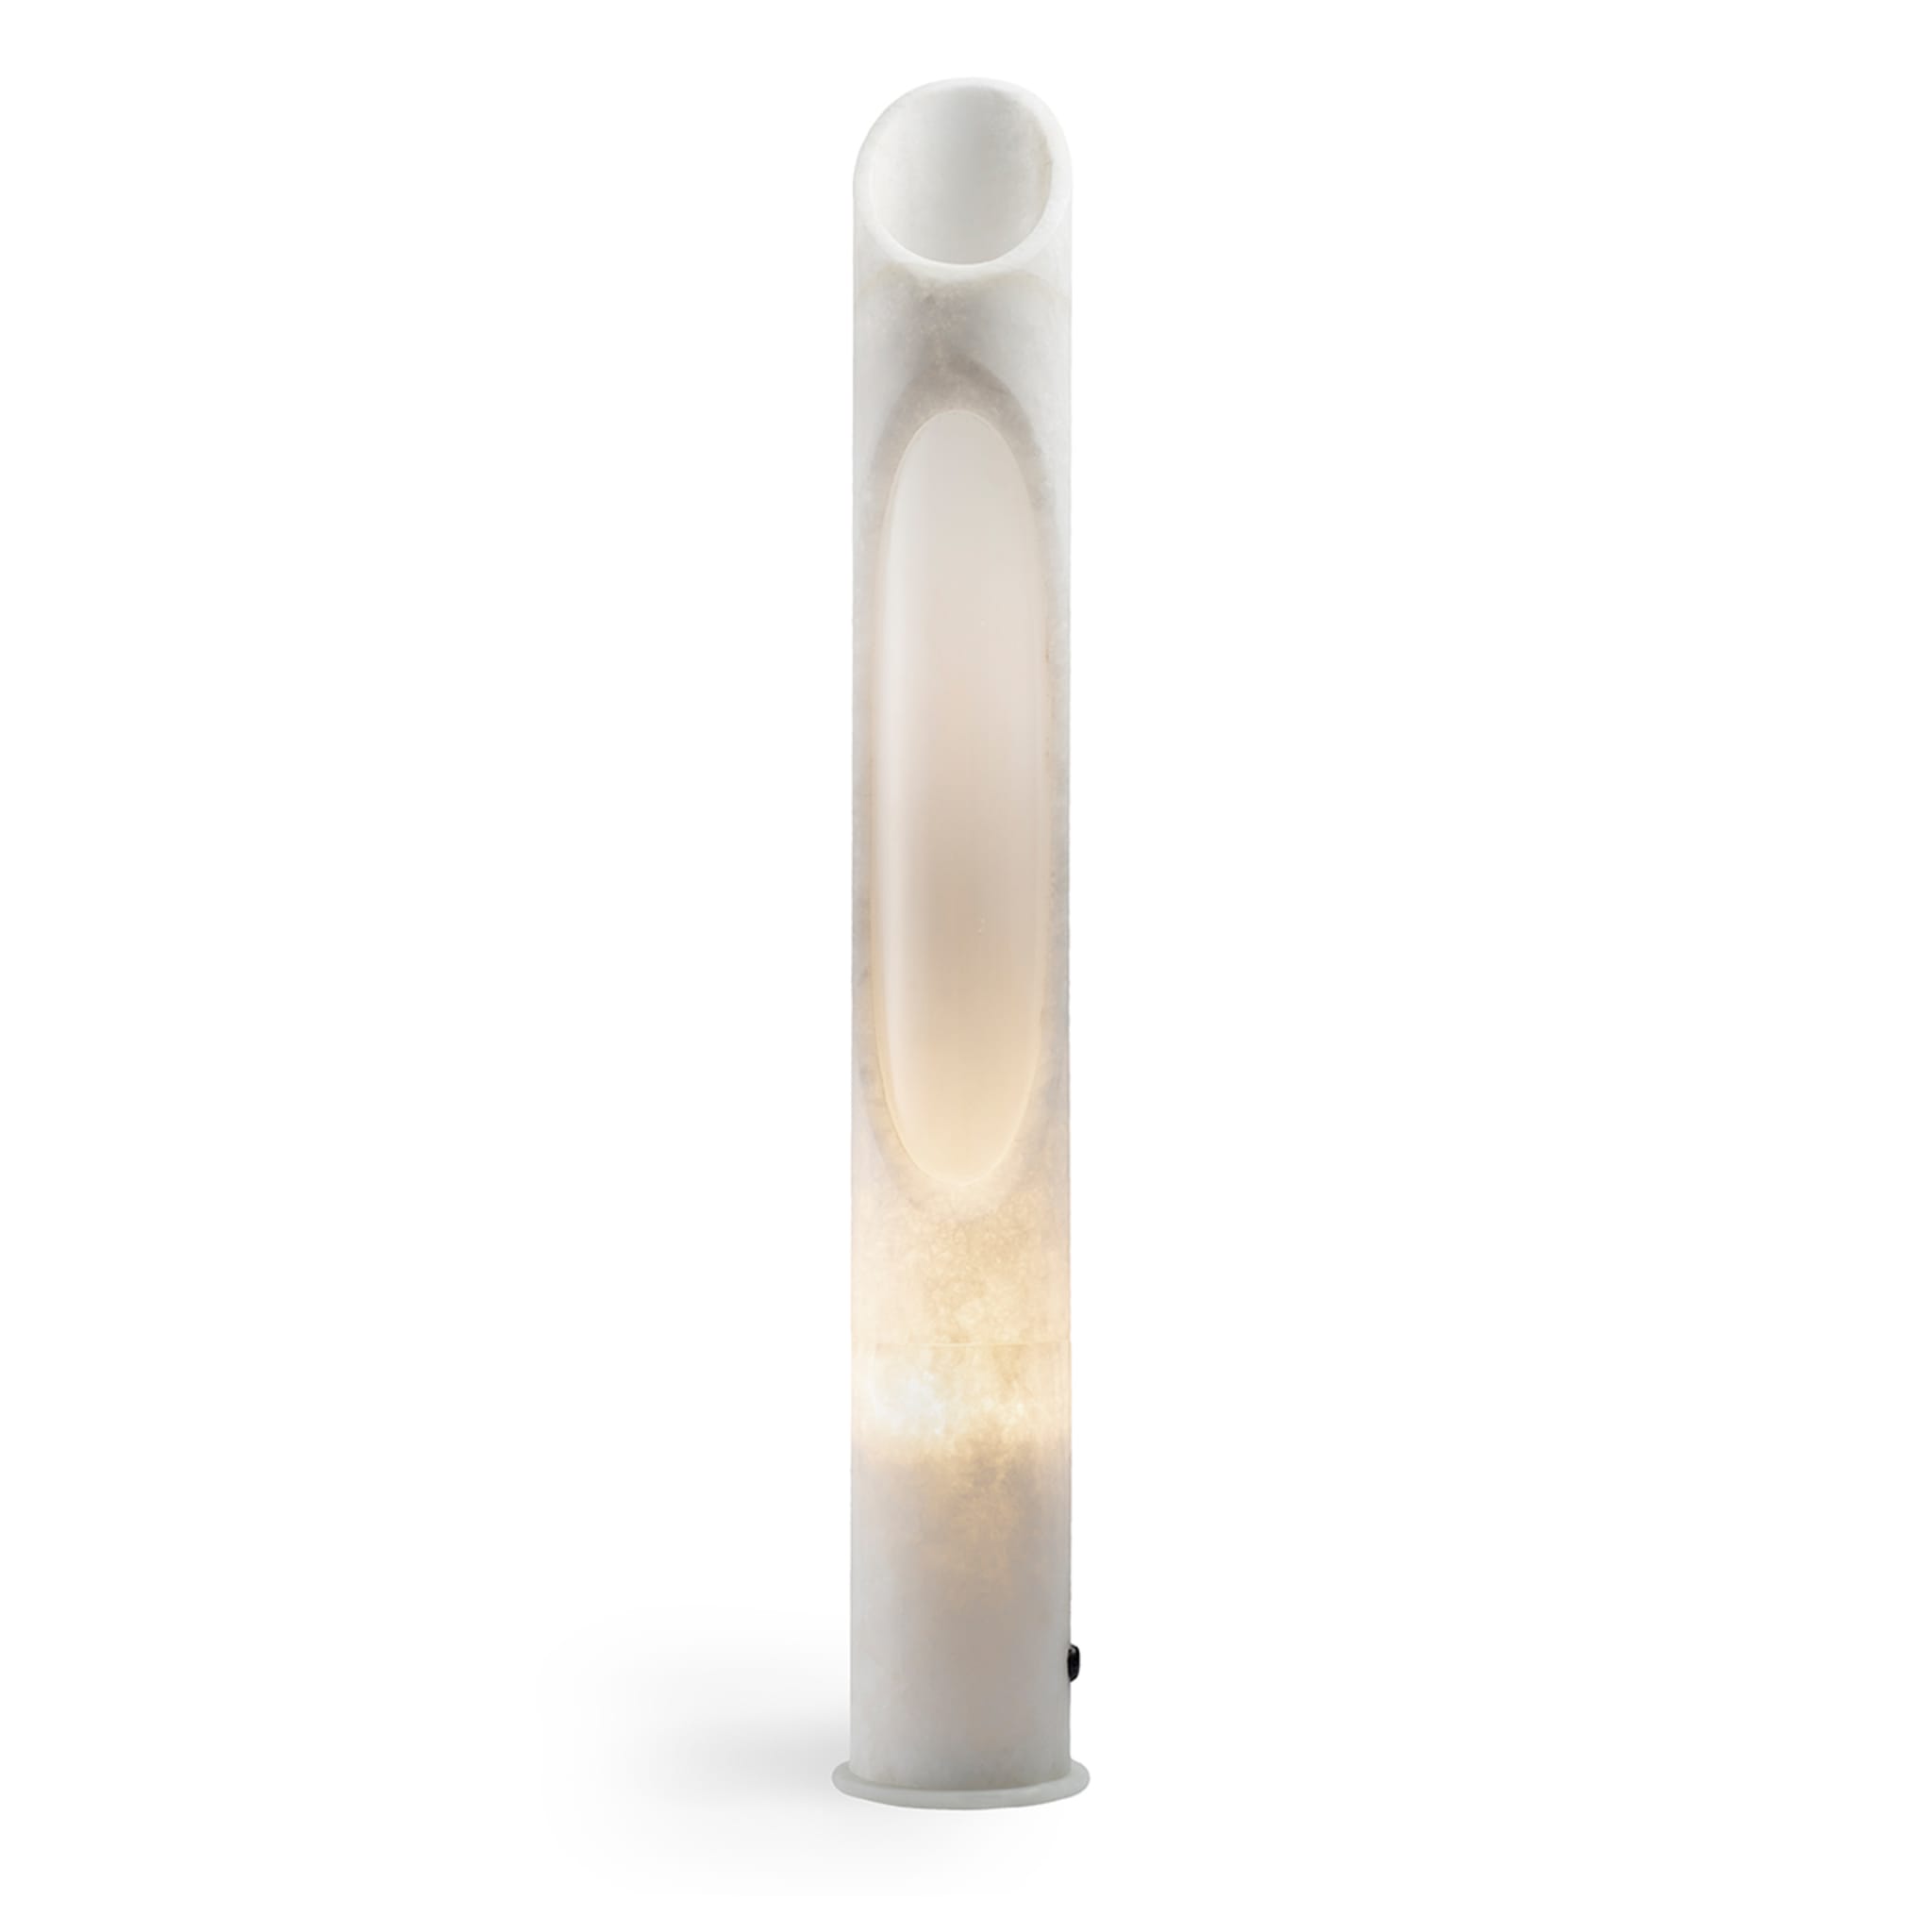  Armonia Lampe L aus weißem Onyxmarmor von Jacopo Simonetti - Alternative Ansicht 1